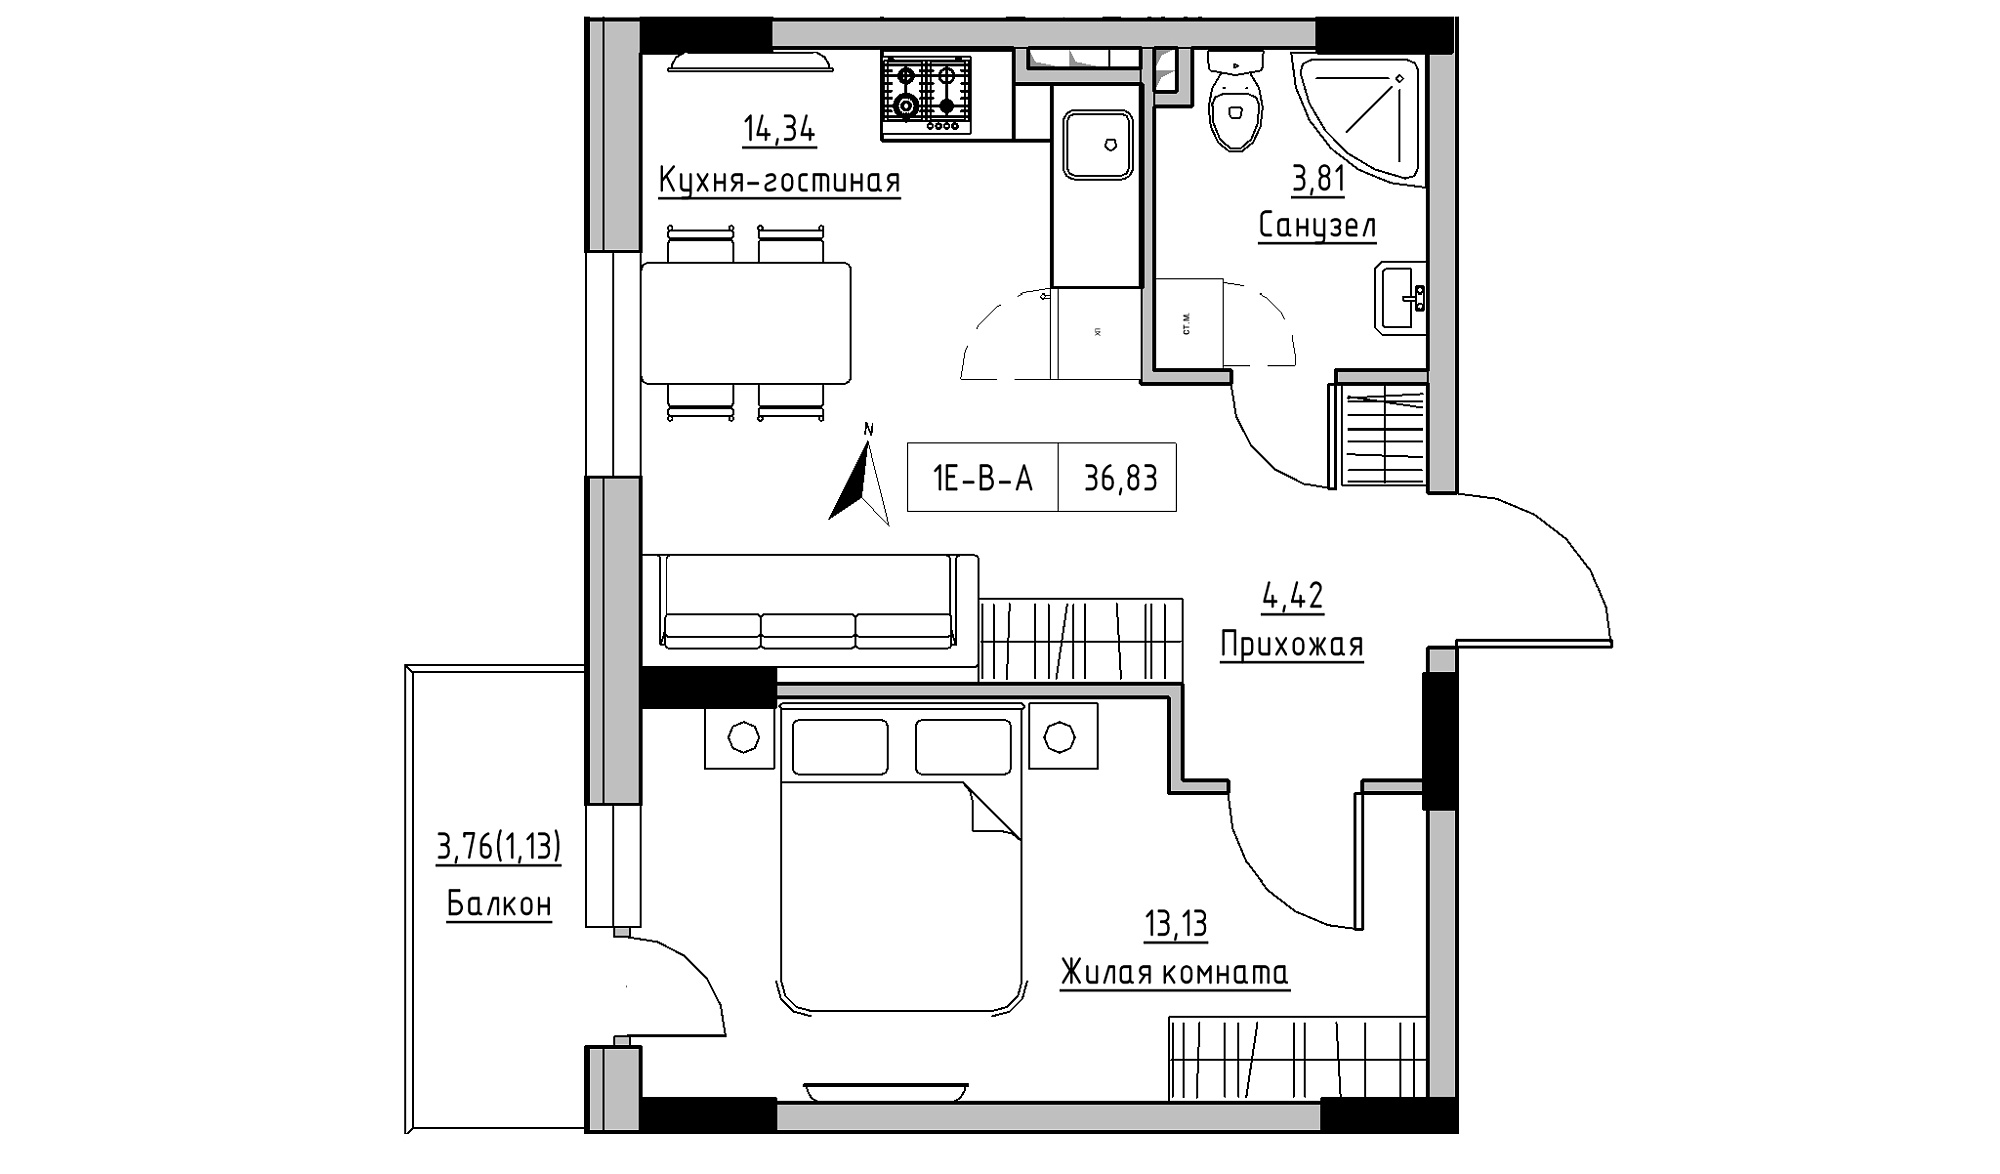 Planning 1-rm flats area 36.83m2, KS-025-02/0004.